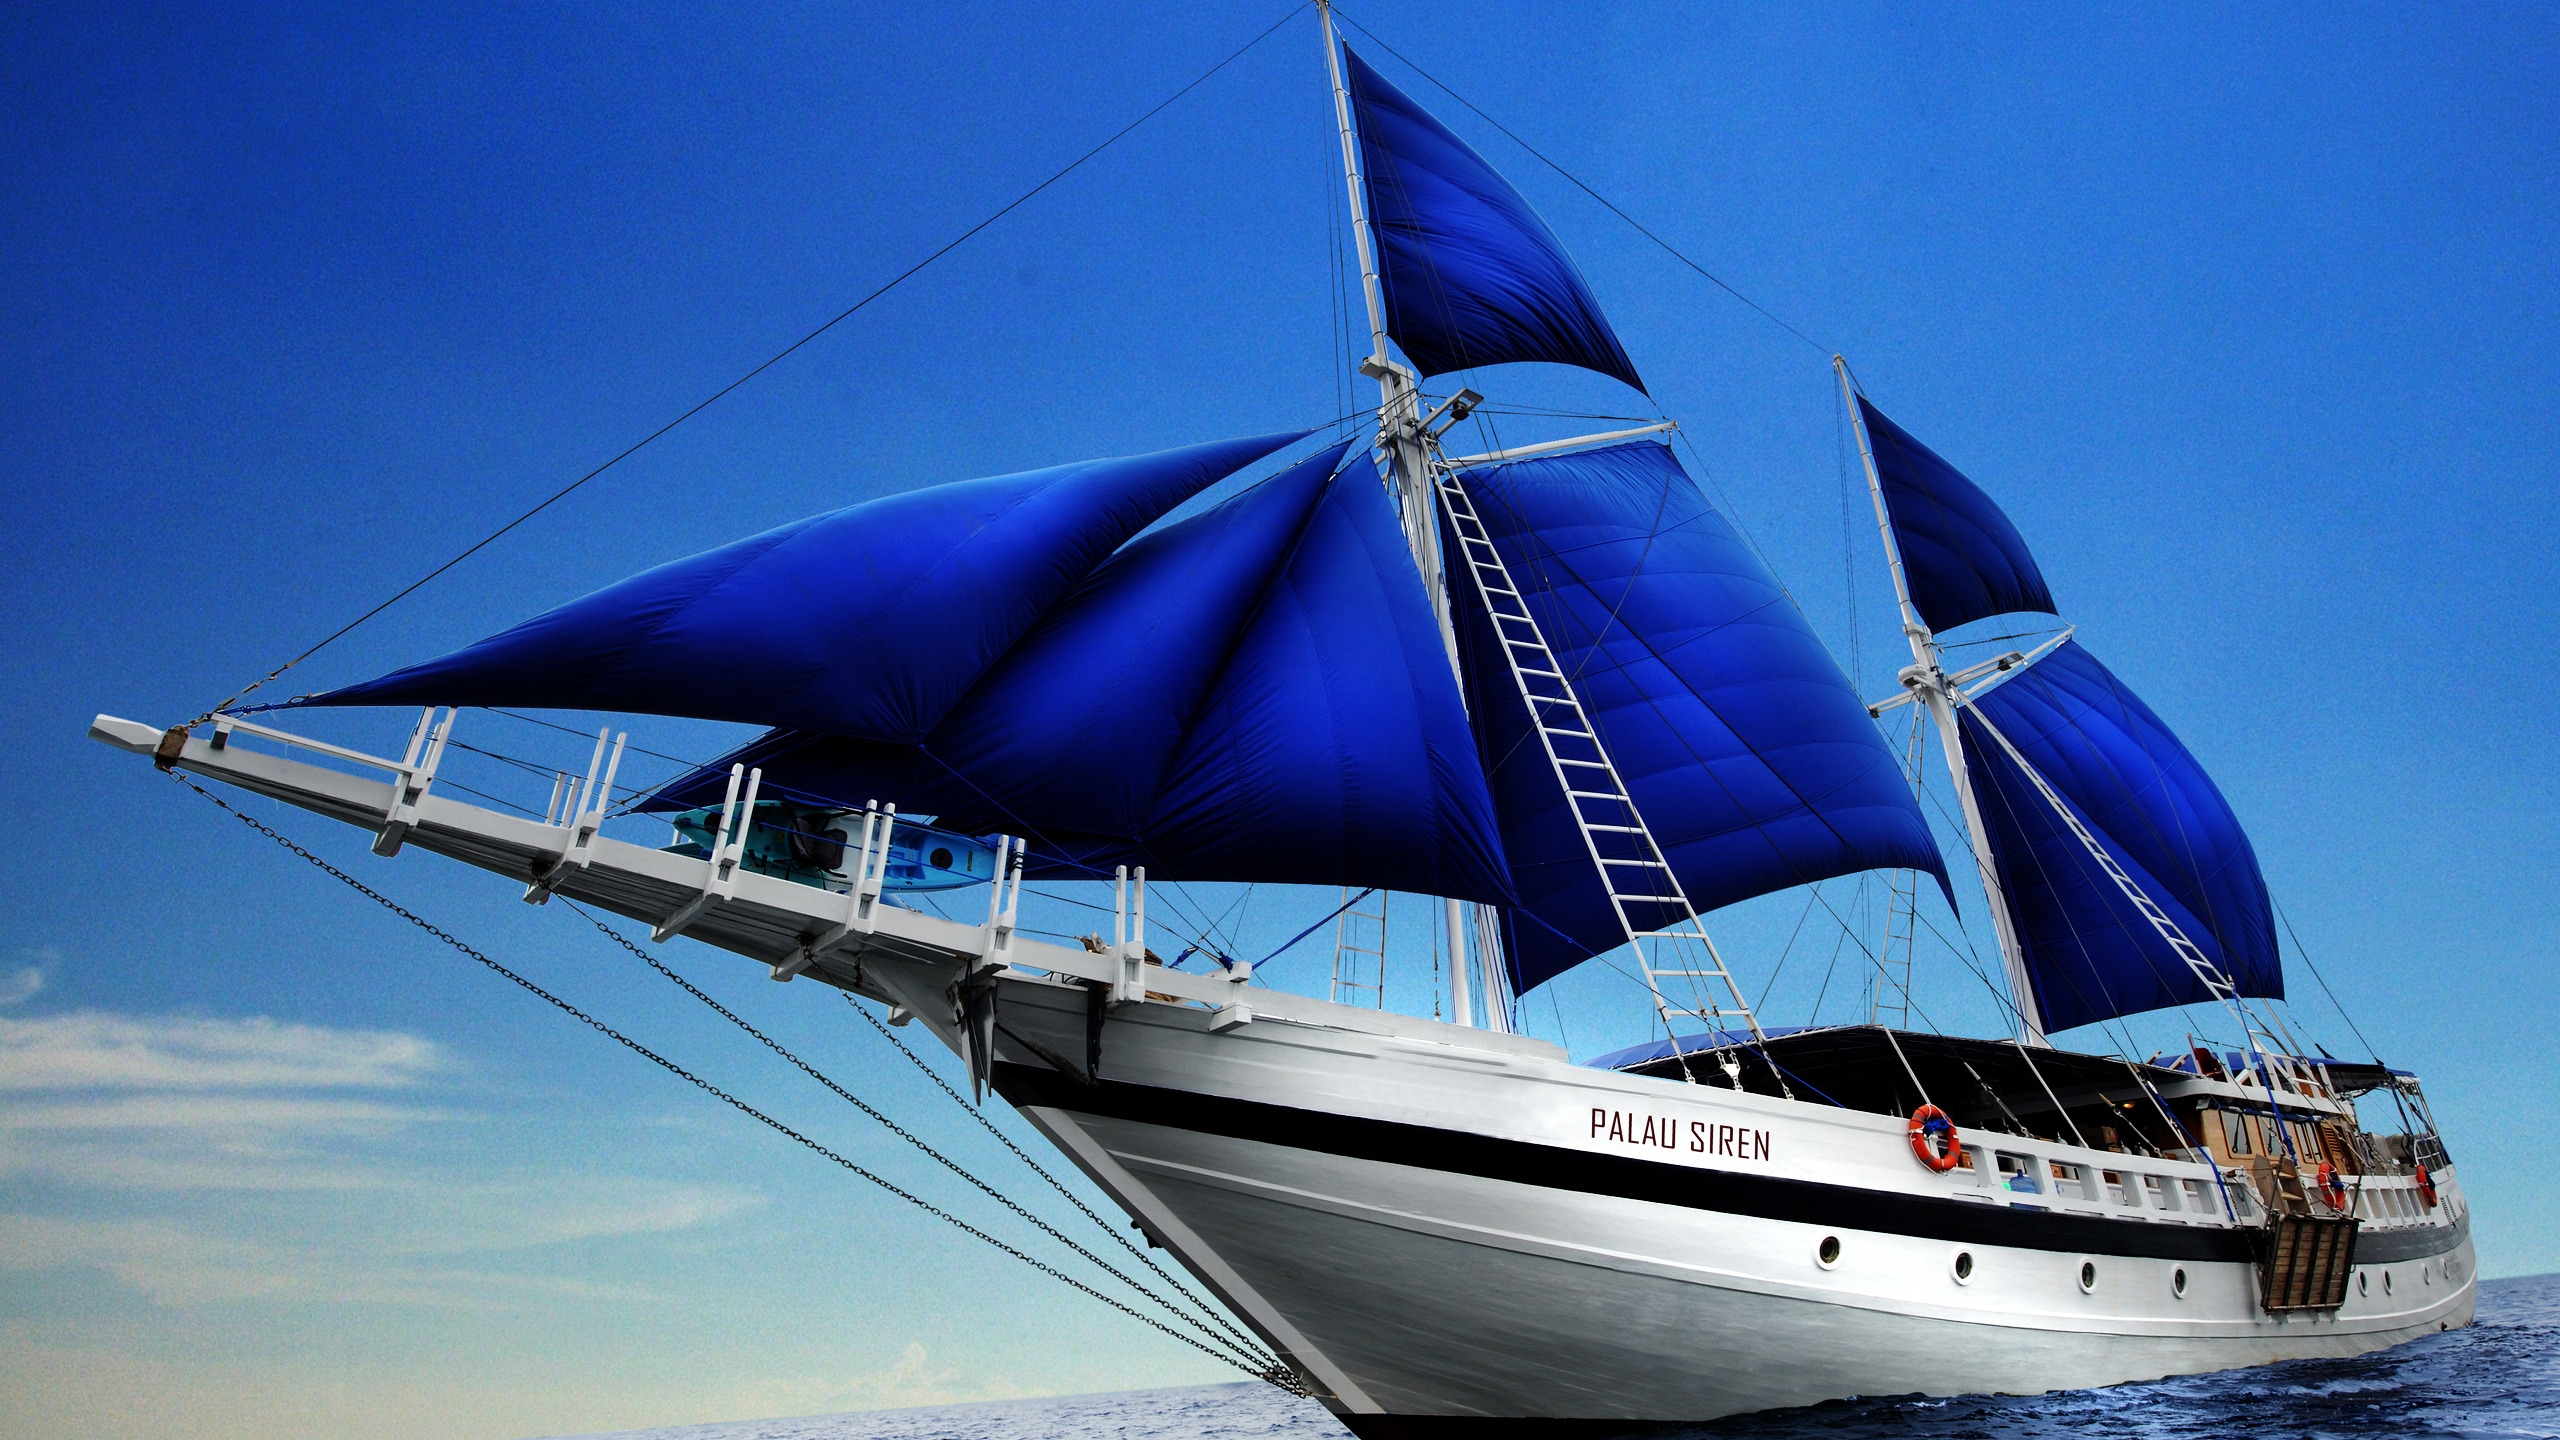 Palau Siren Boat for 2560x1440 HDTV resolution